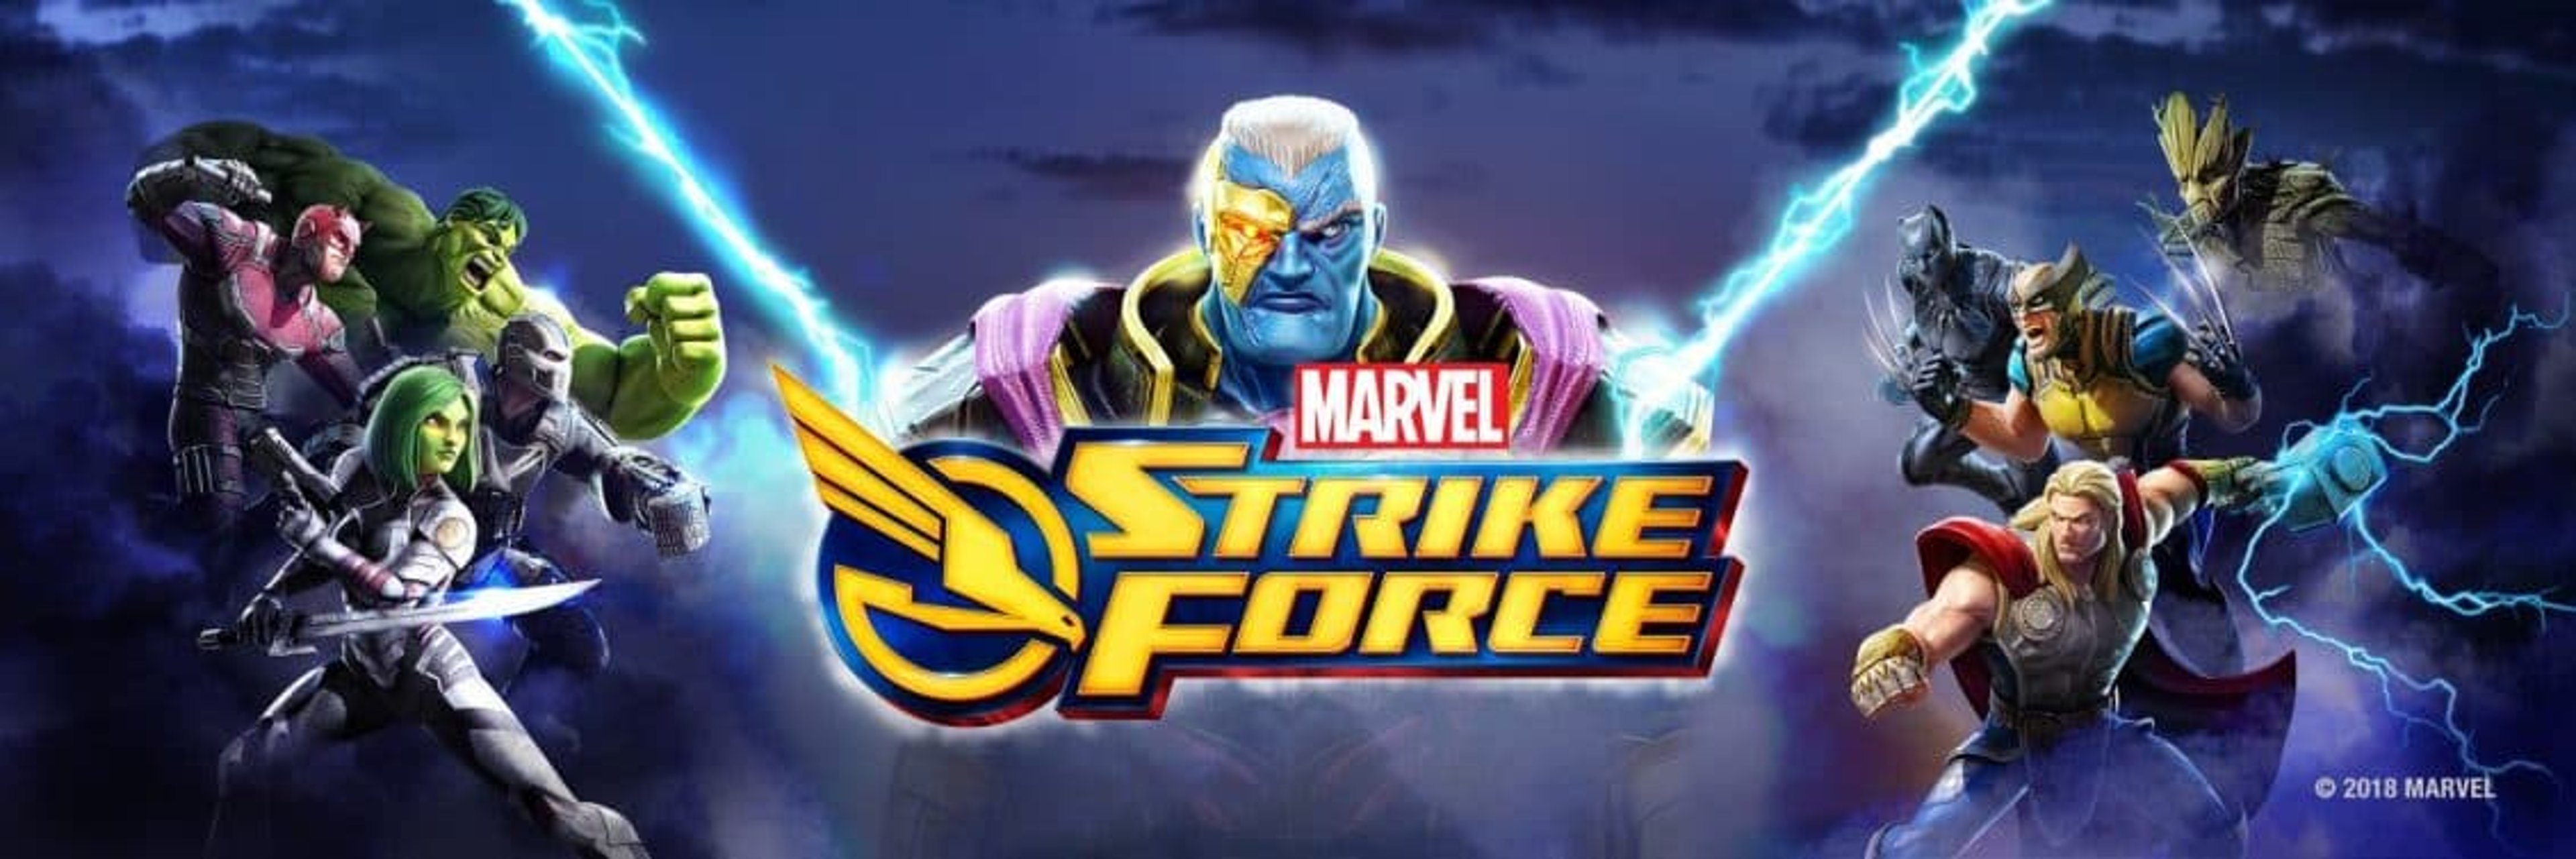 Marvel Strike Force – La Recensione Cover